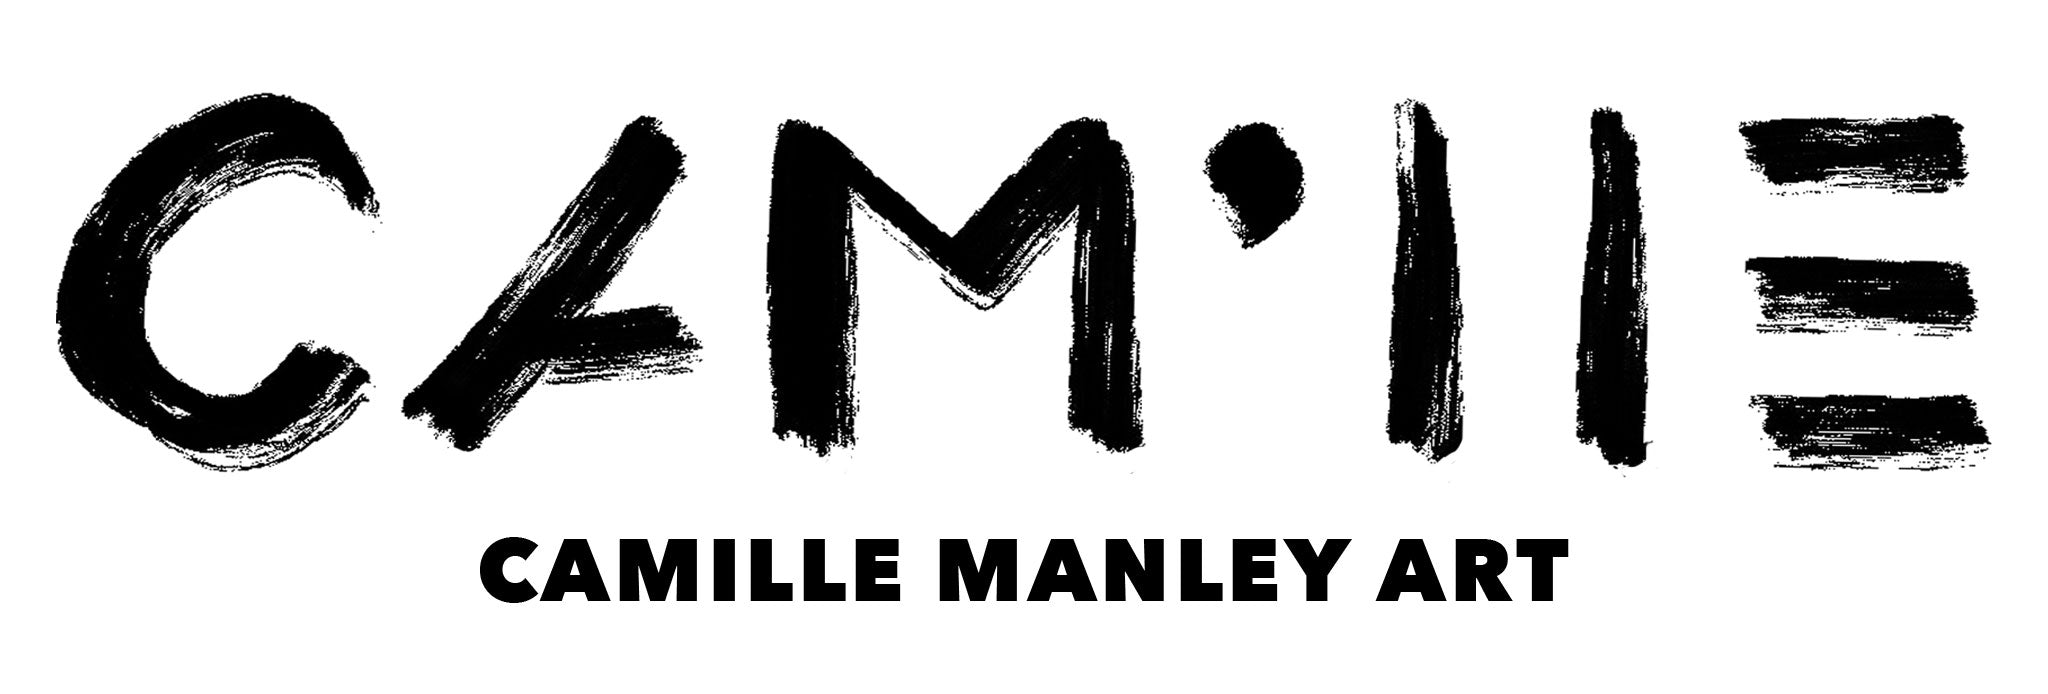 Camille, Name Art Print